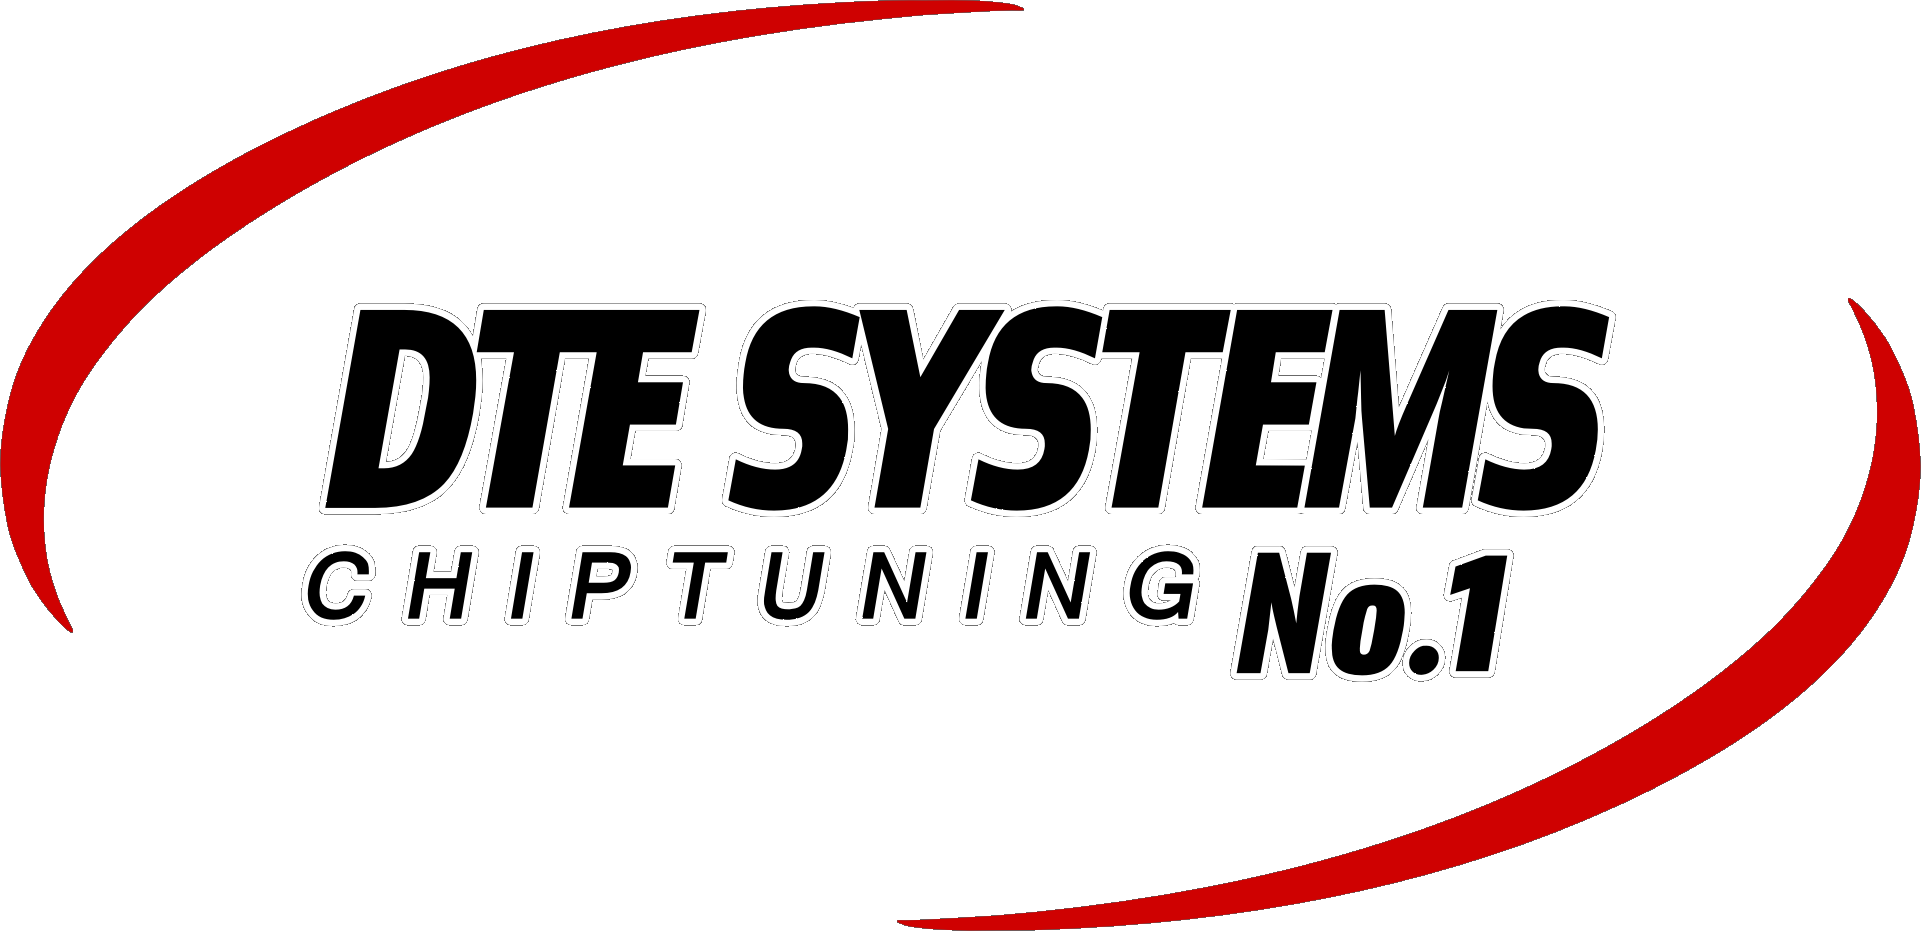 DTE System